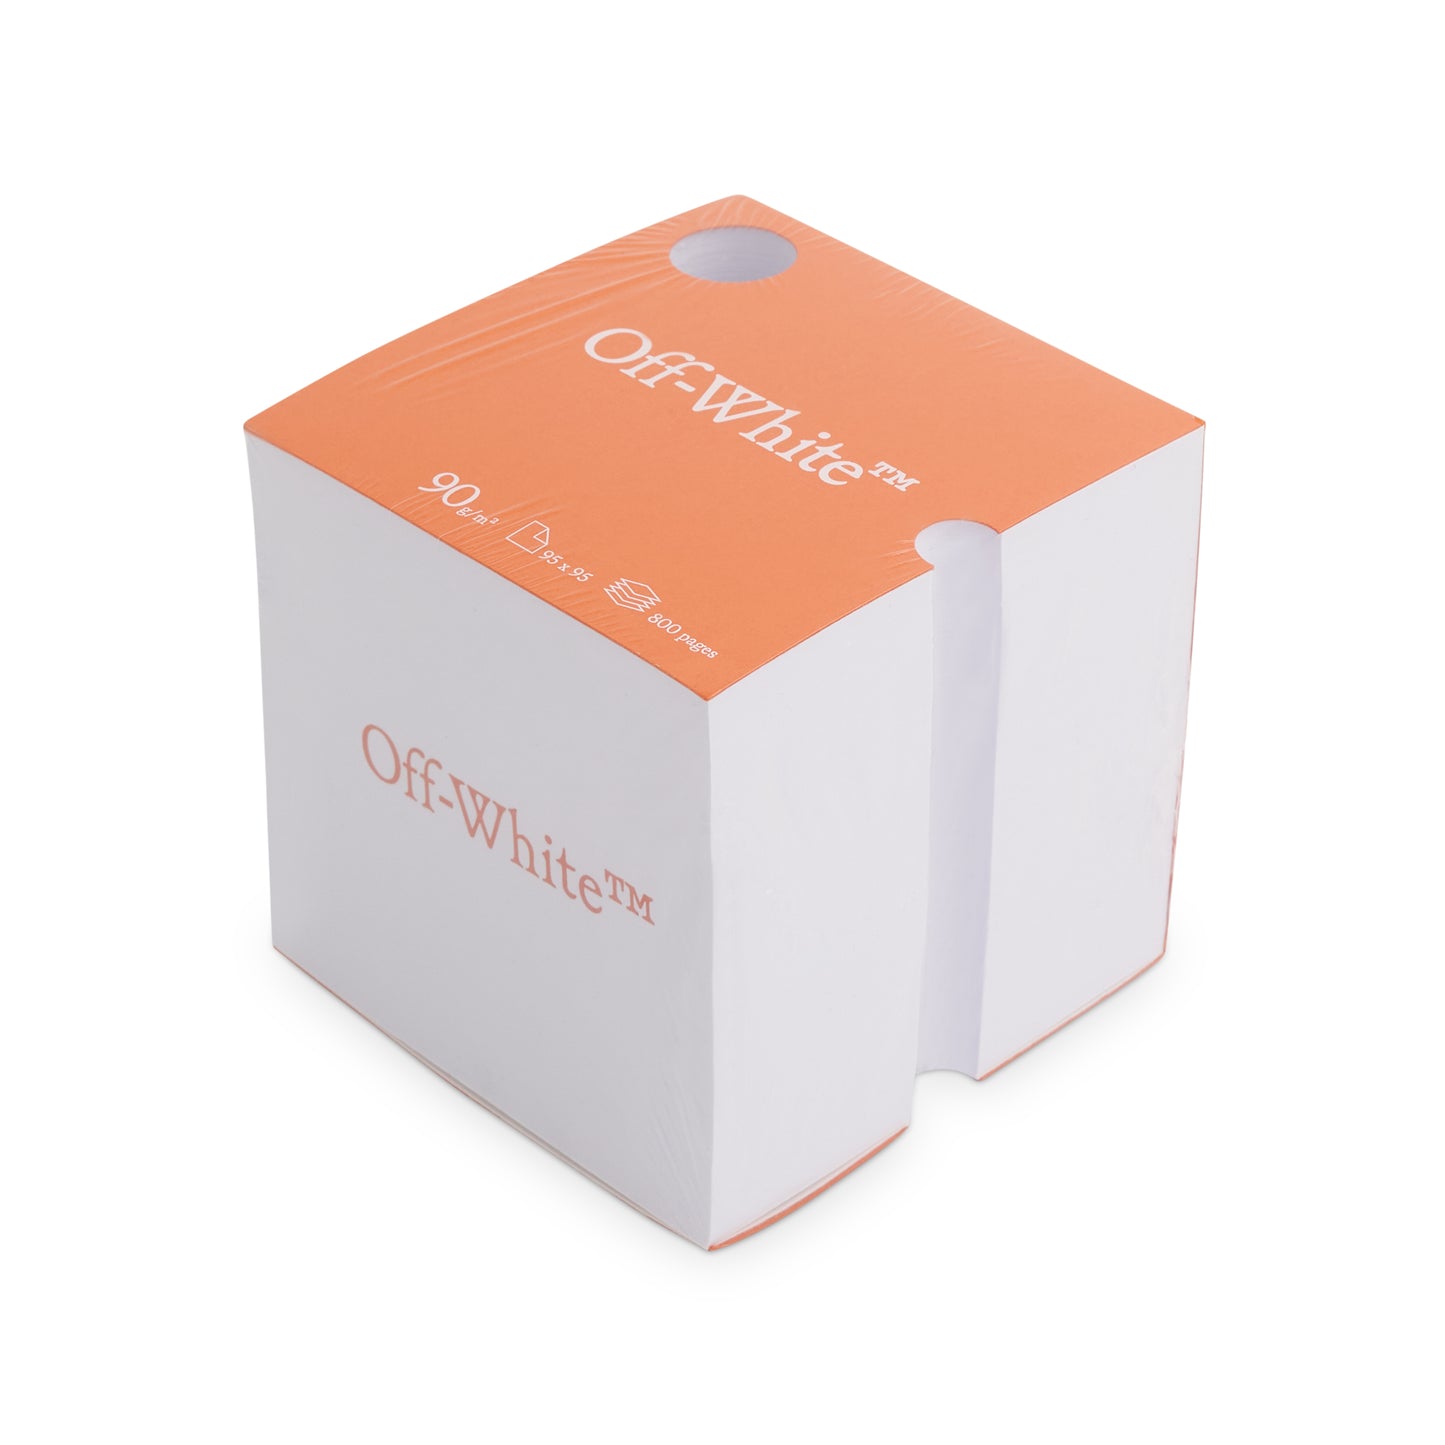 Note Cube in Orange/White